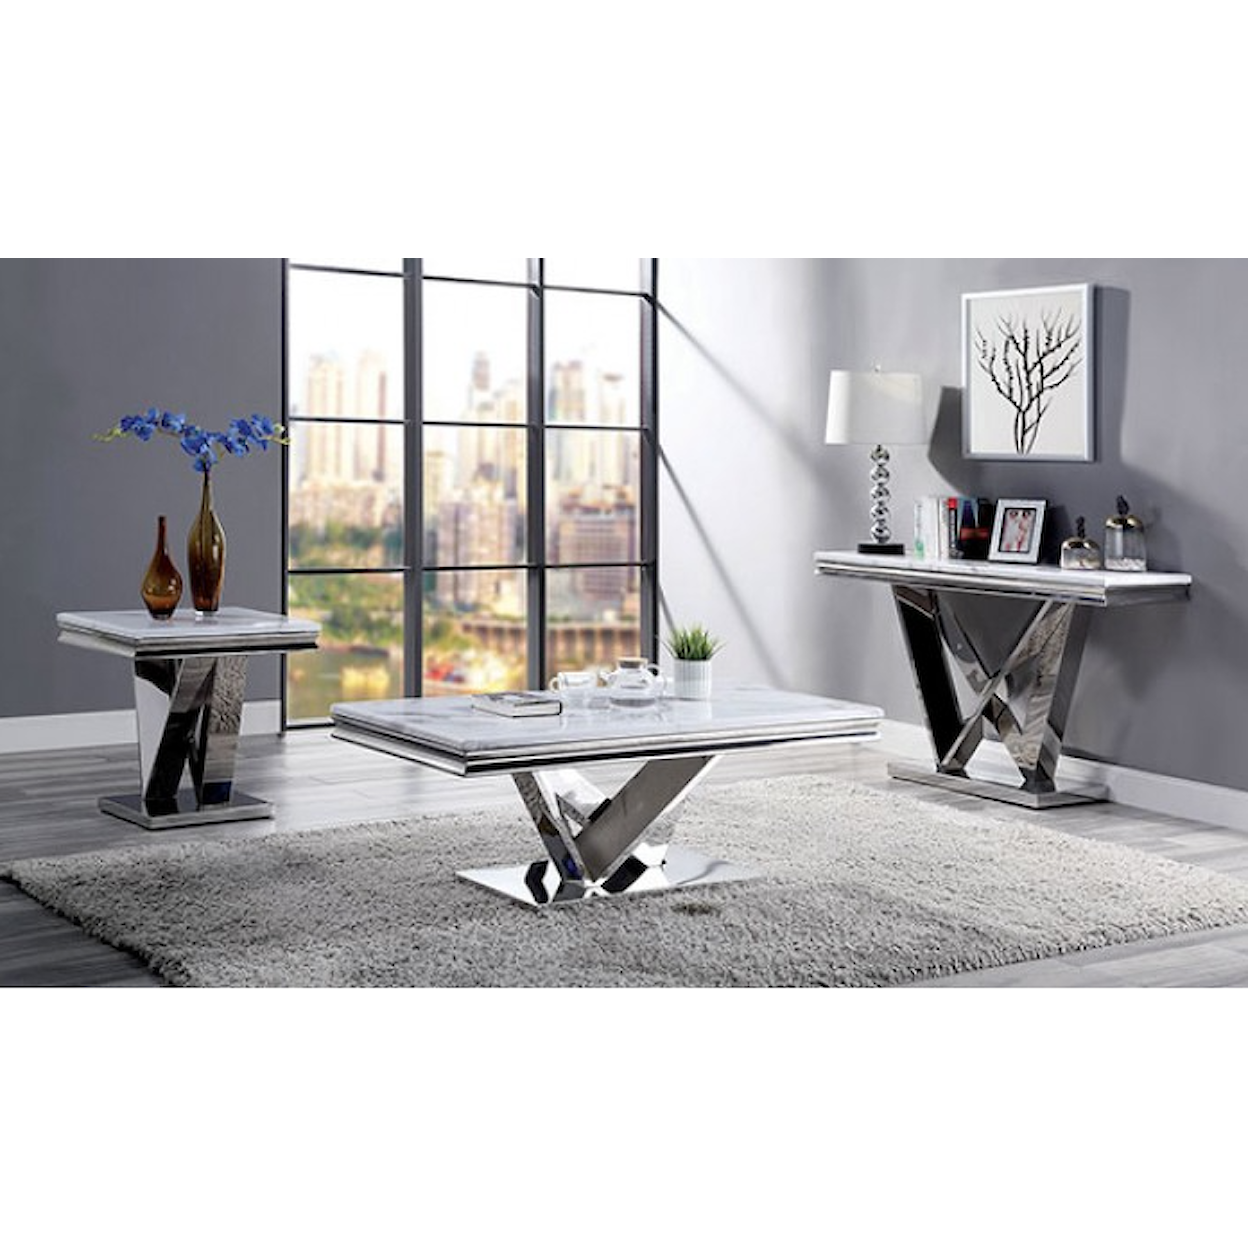 Furniture of America Villarsglane Sofa Table